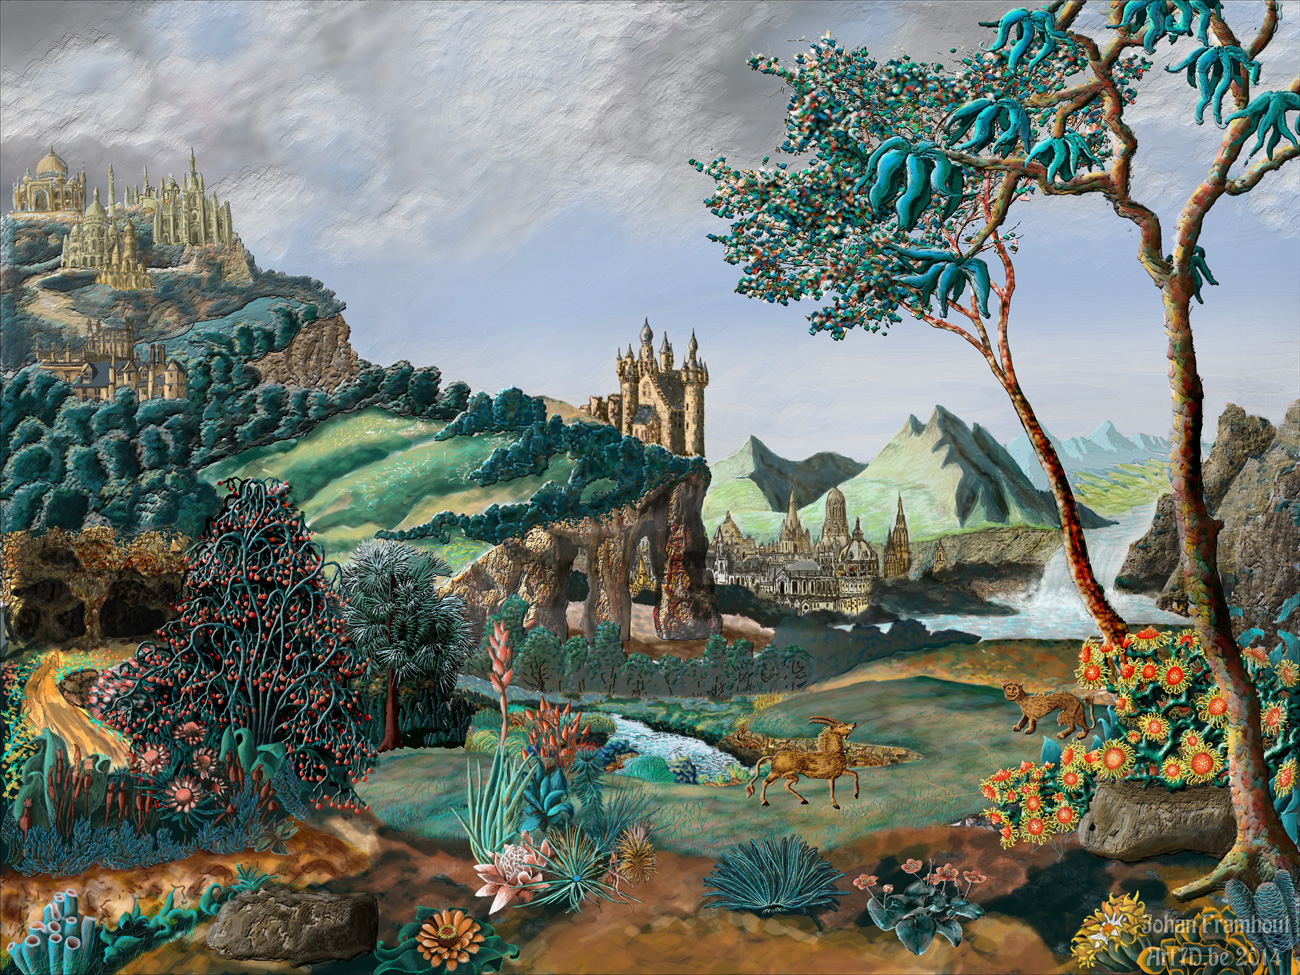 Surreal baroque Landscape by Johan Framhout